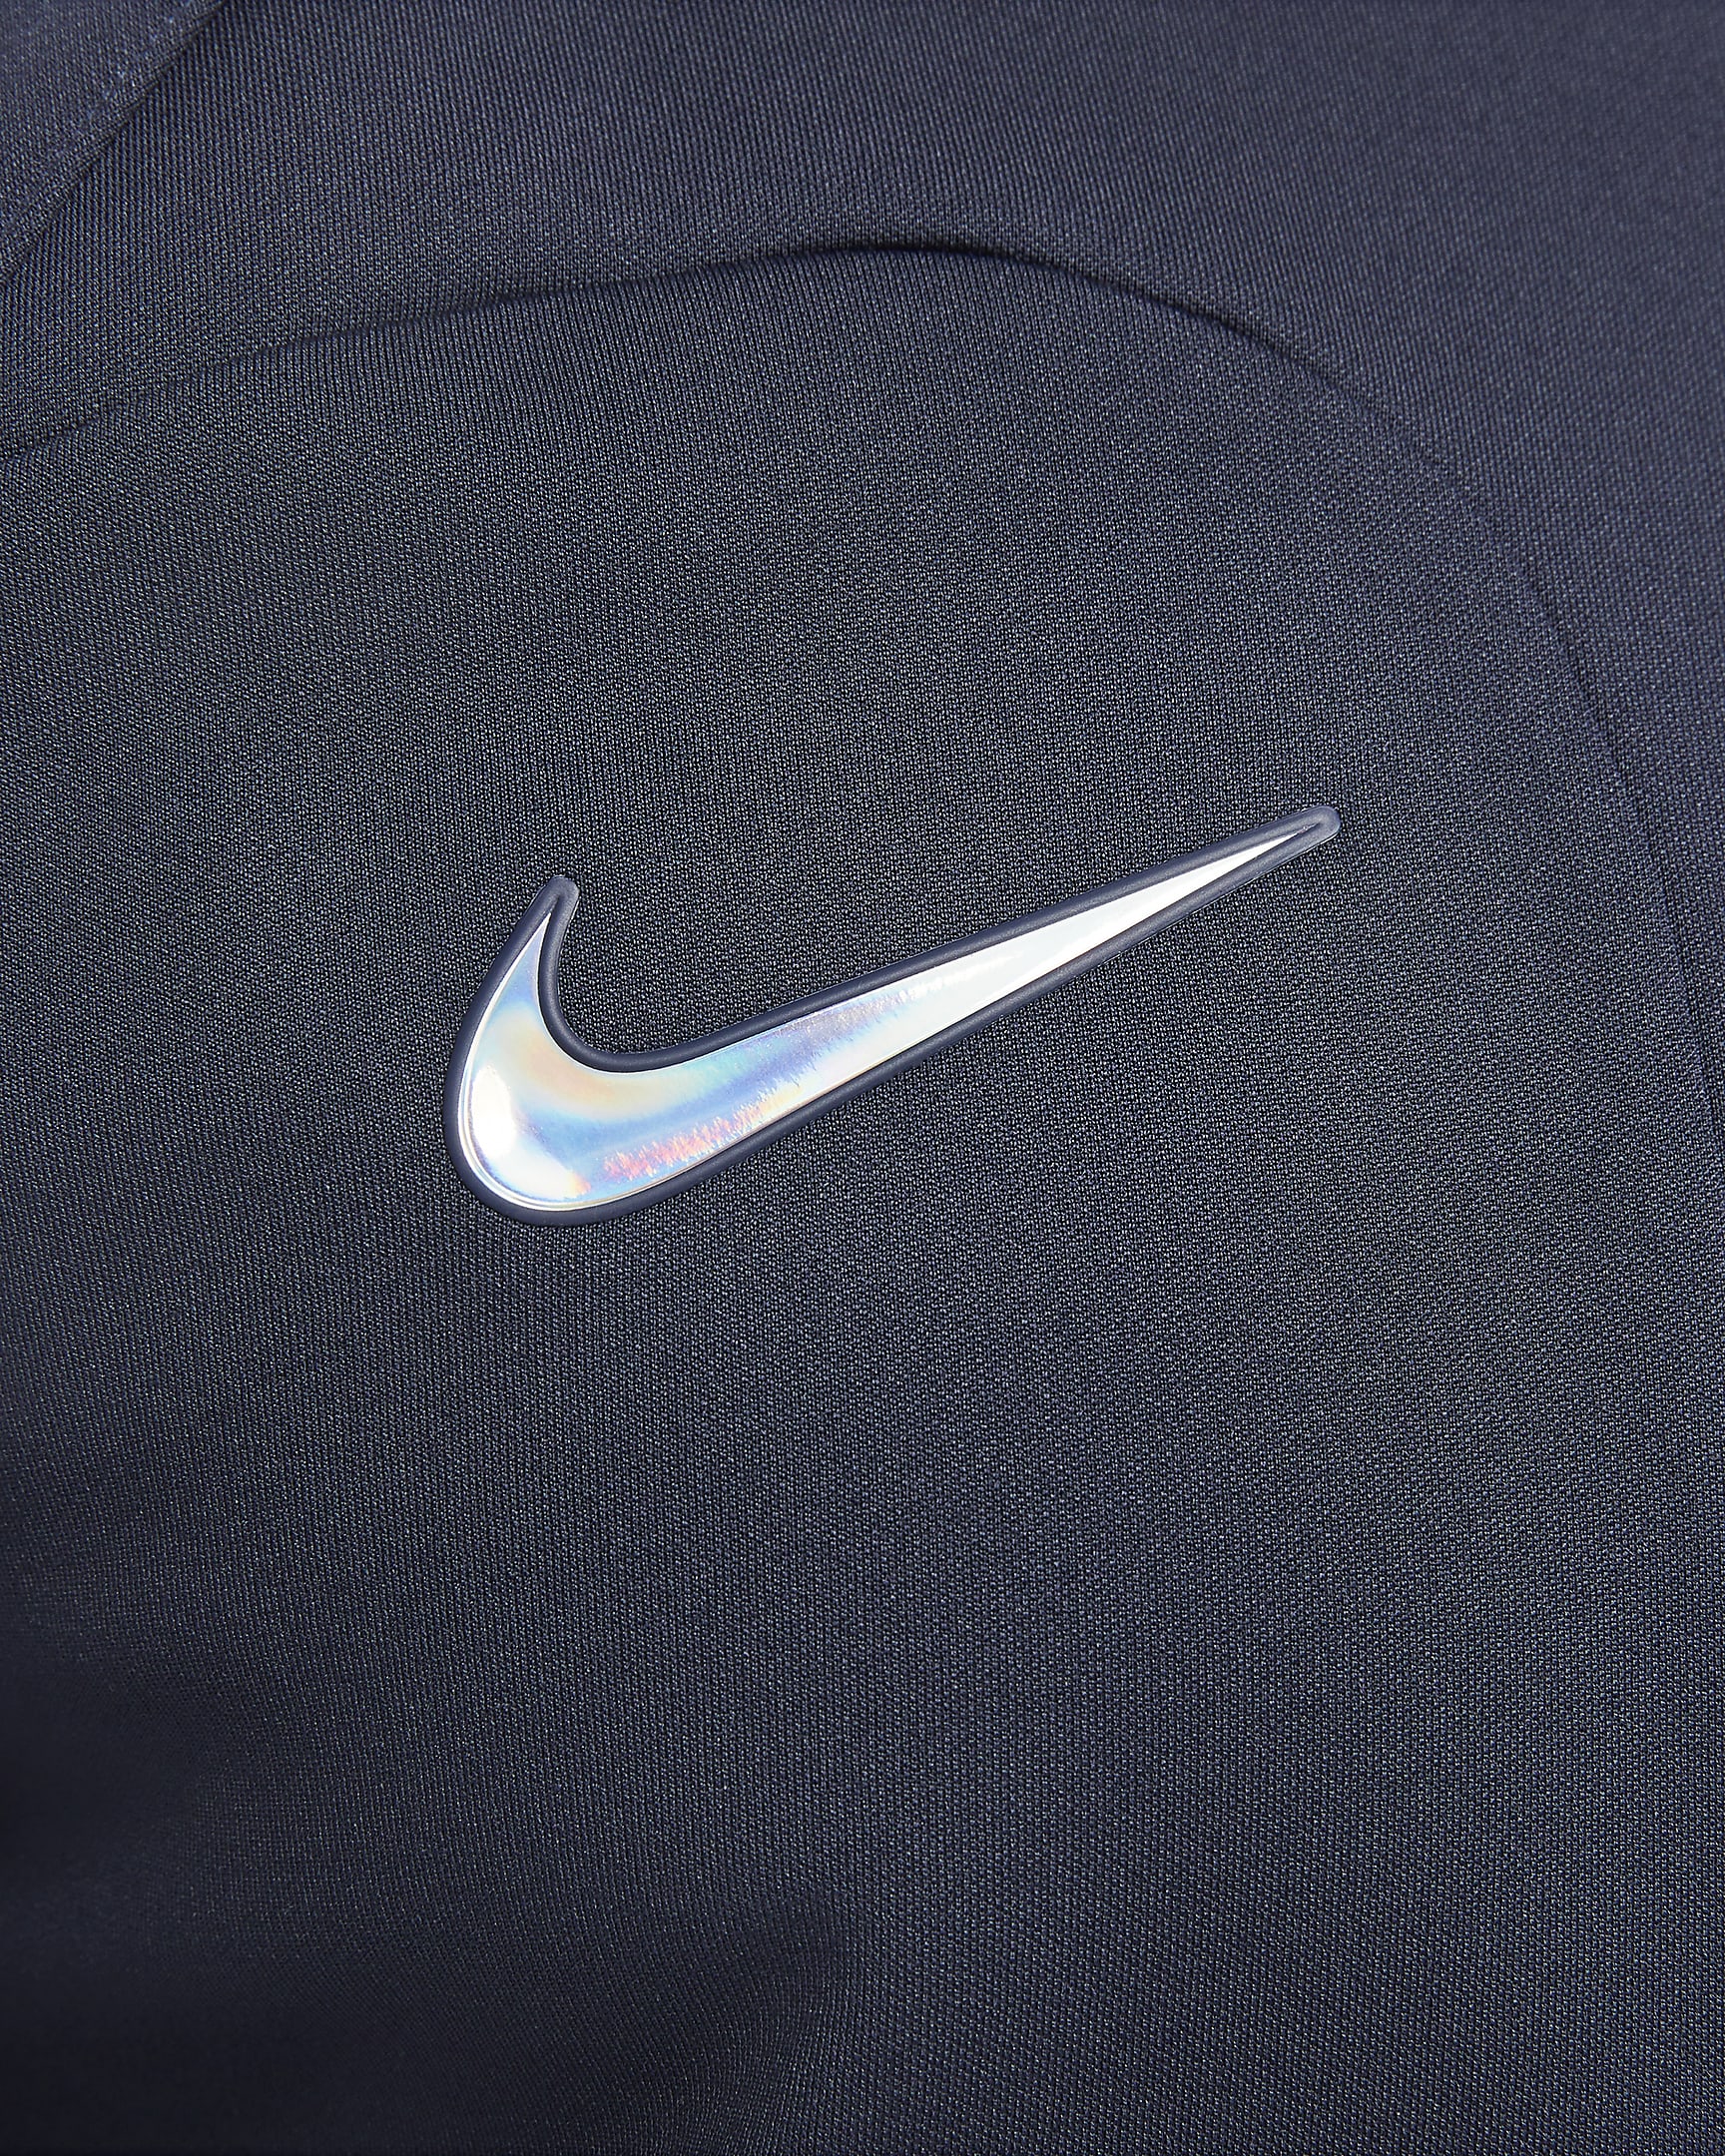 Tottenham Hotspur Academy Pro Men's Nike Full-Zip Knit Football Jacket ...